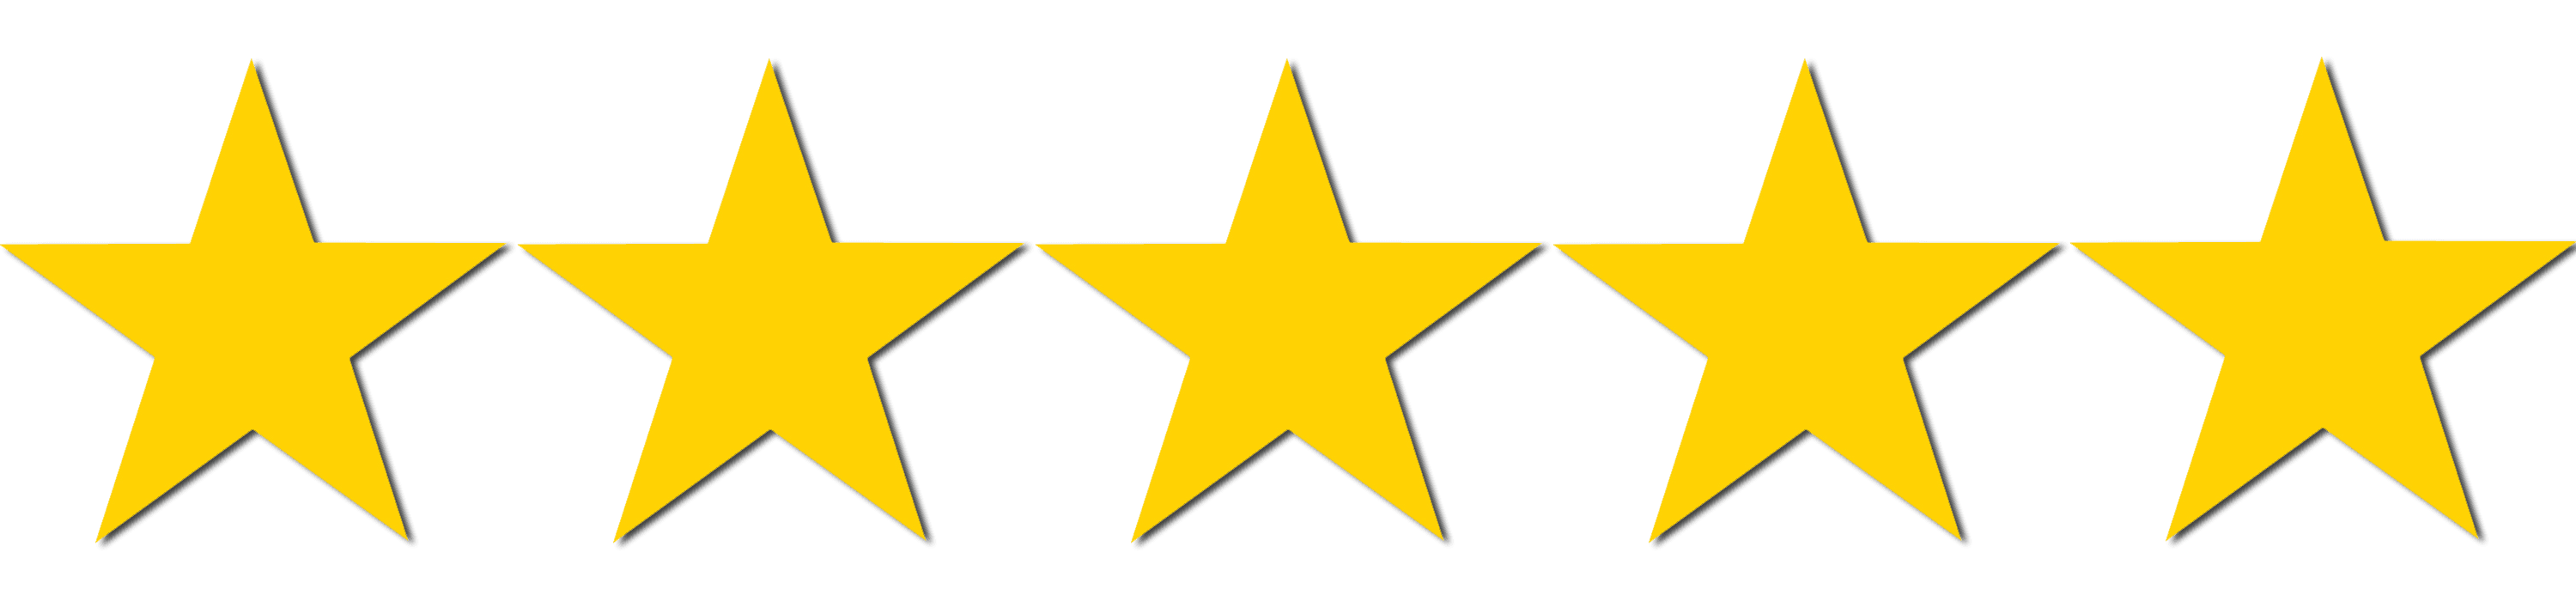 Golden-5-Star-Rating-PNG